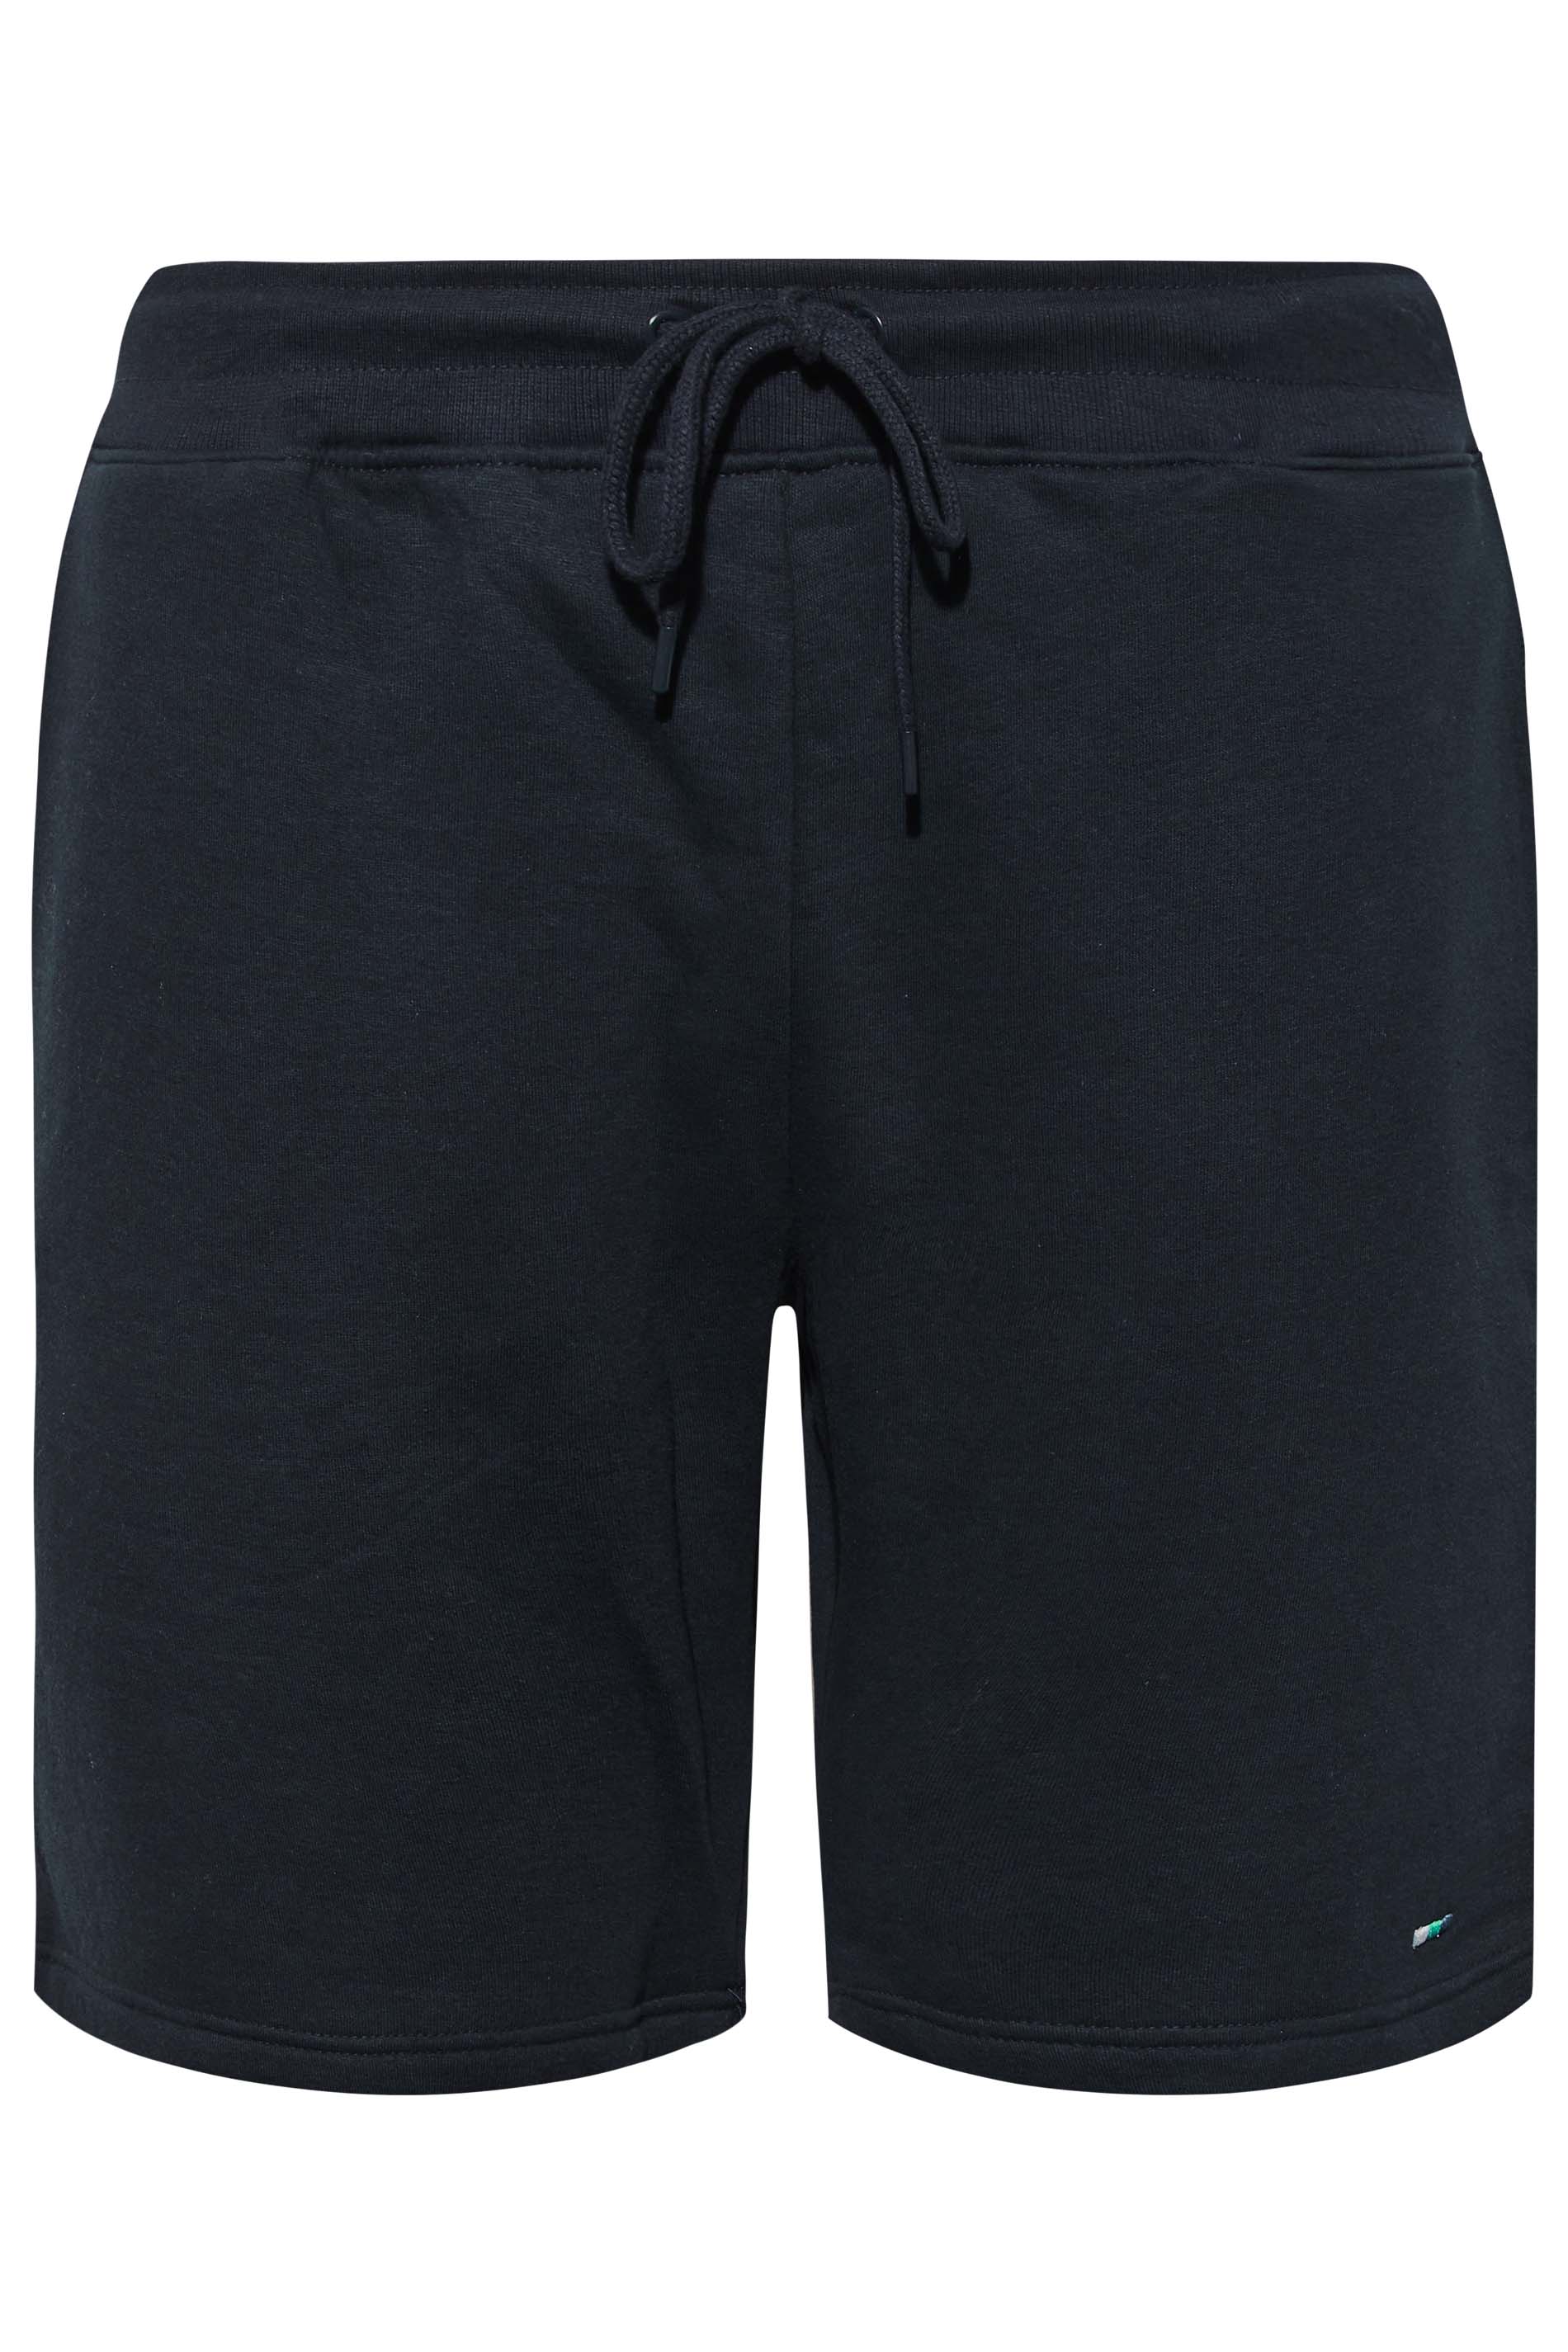 BadRhino Navy Blue Essential Jogger Shorts | BadRhino